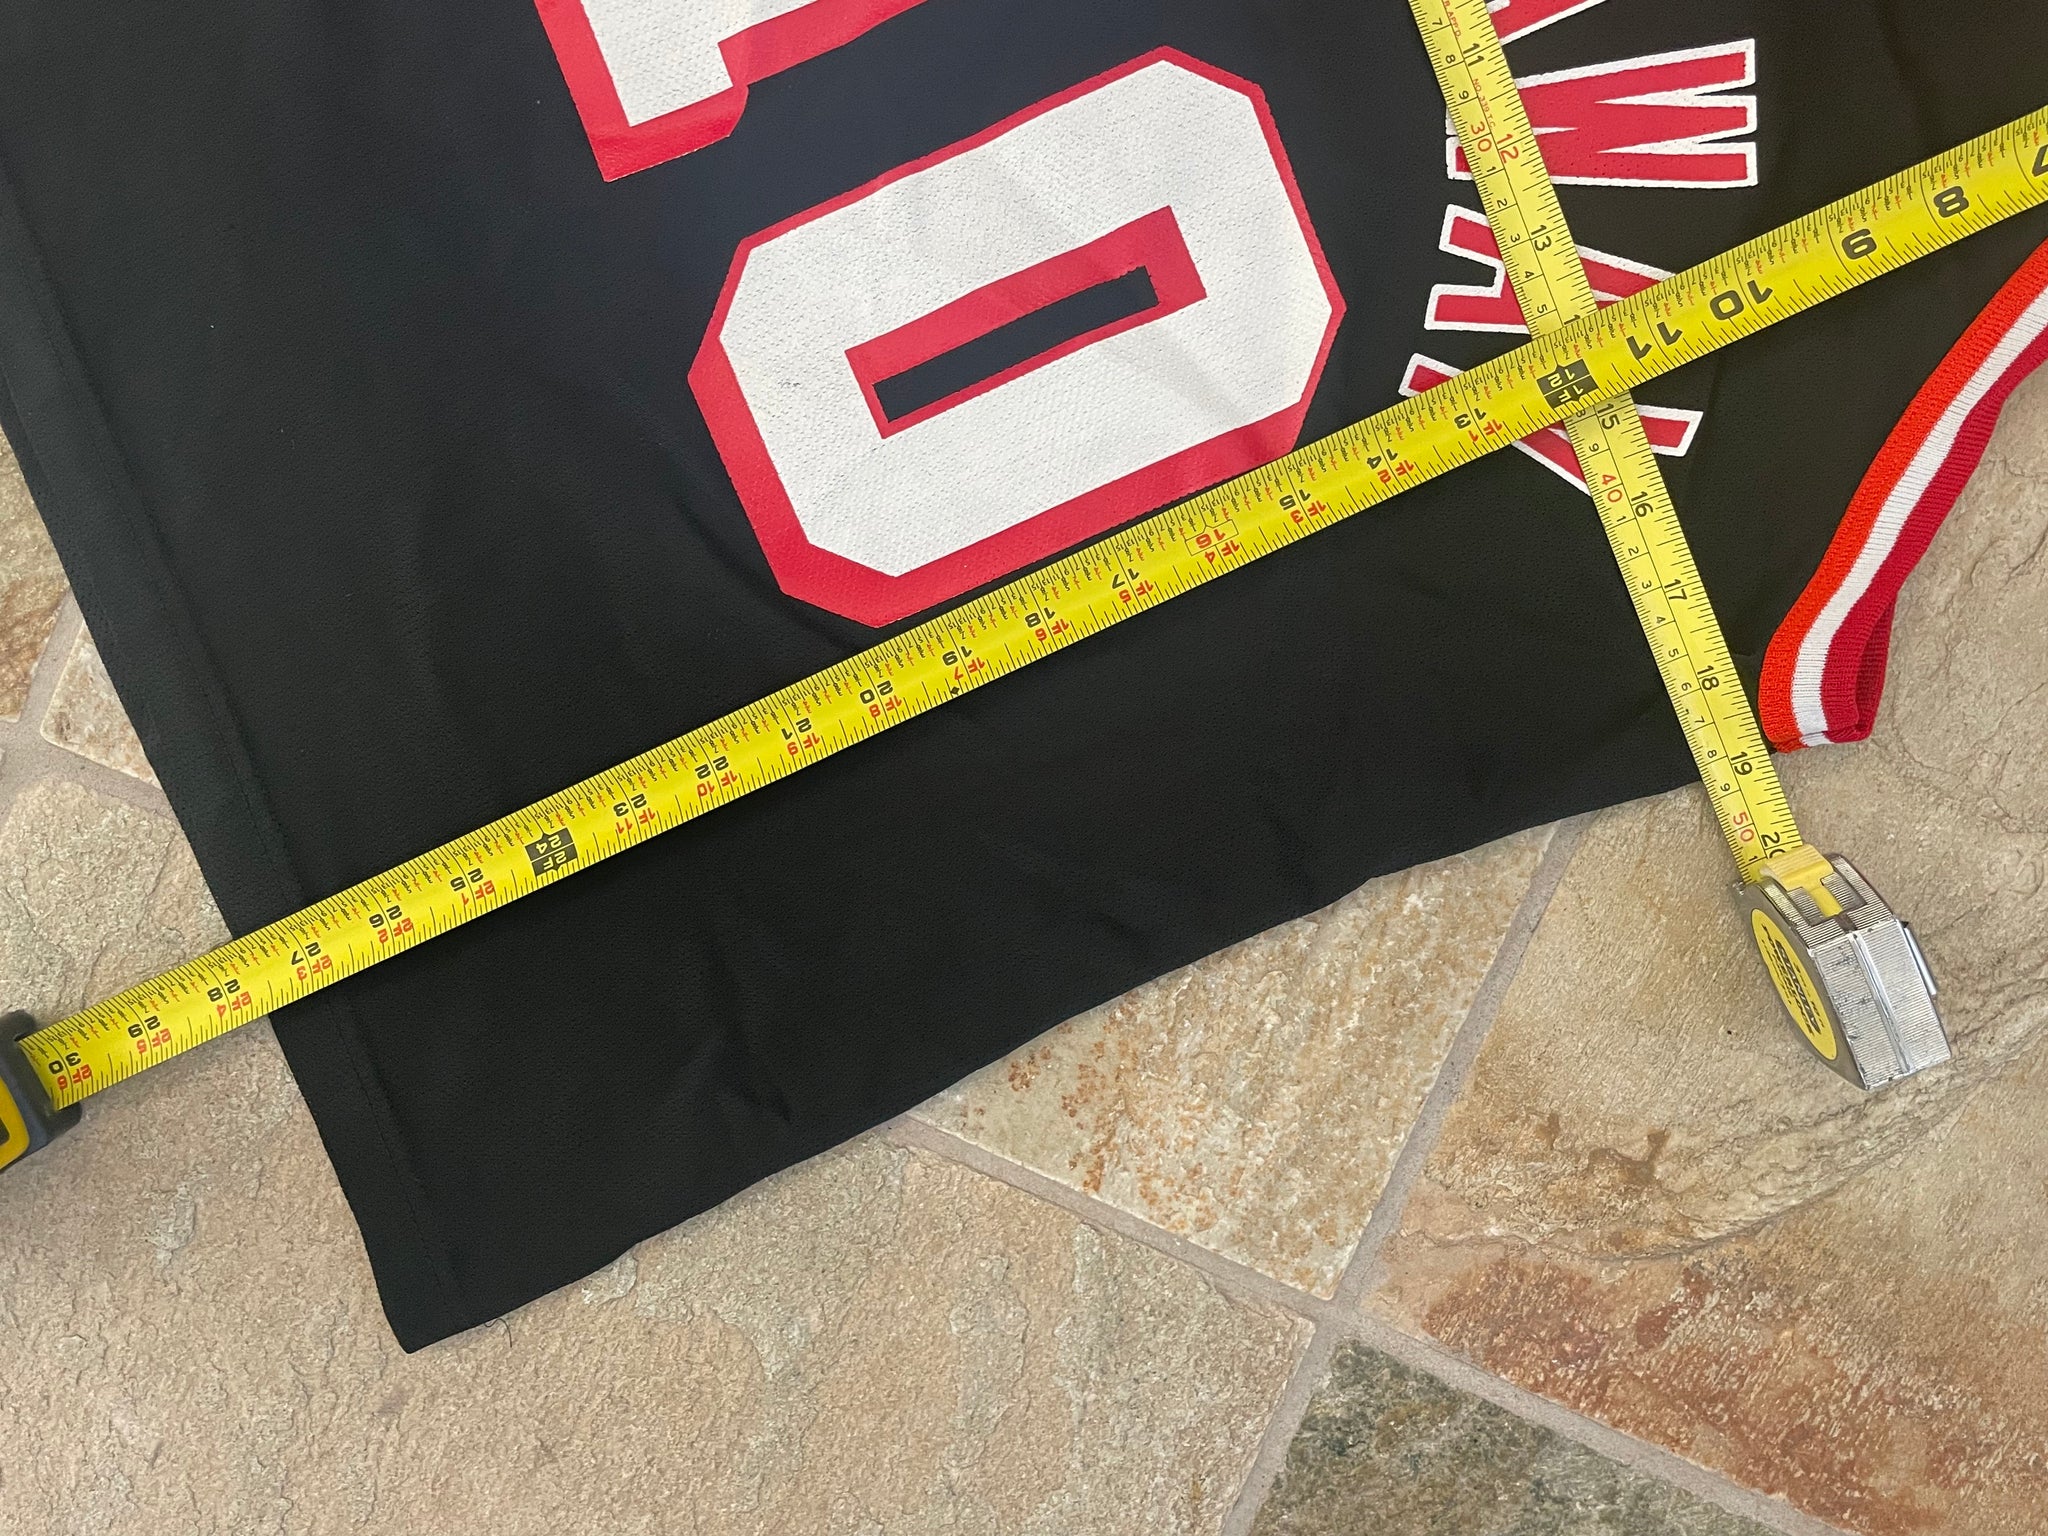 95/96 Tim Hardaway Miami Heat Champion Authentic Team Issued NBA Jersey  Size 46